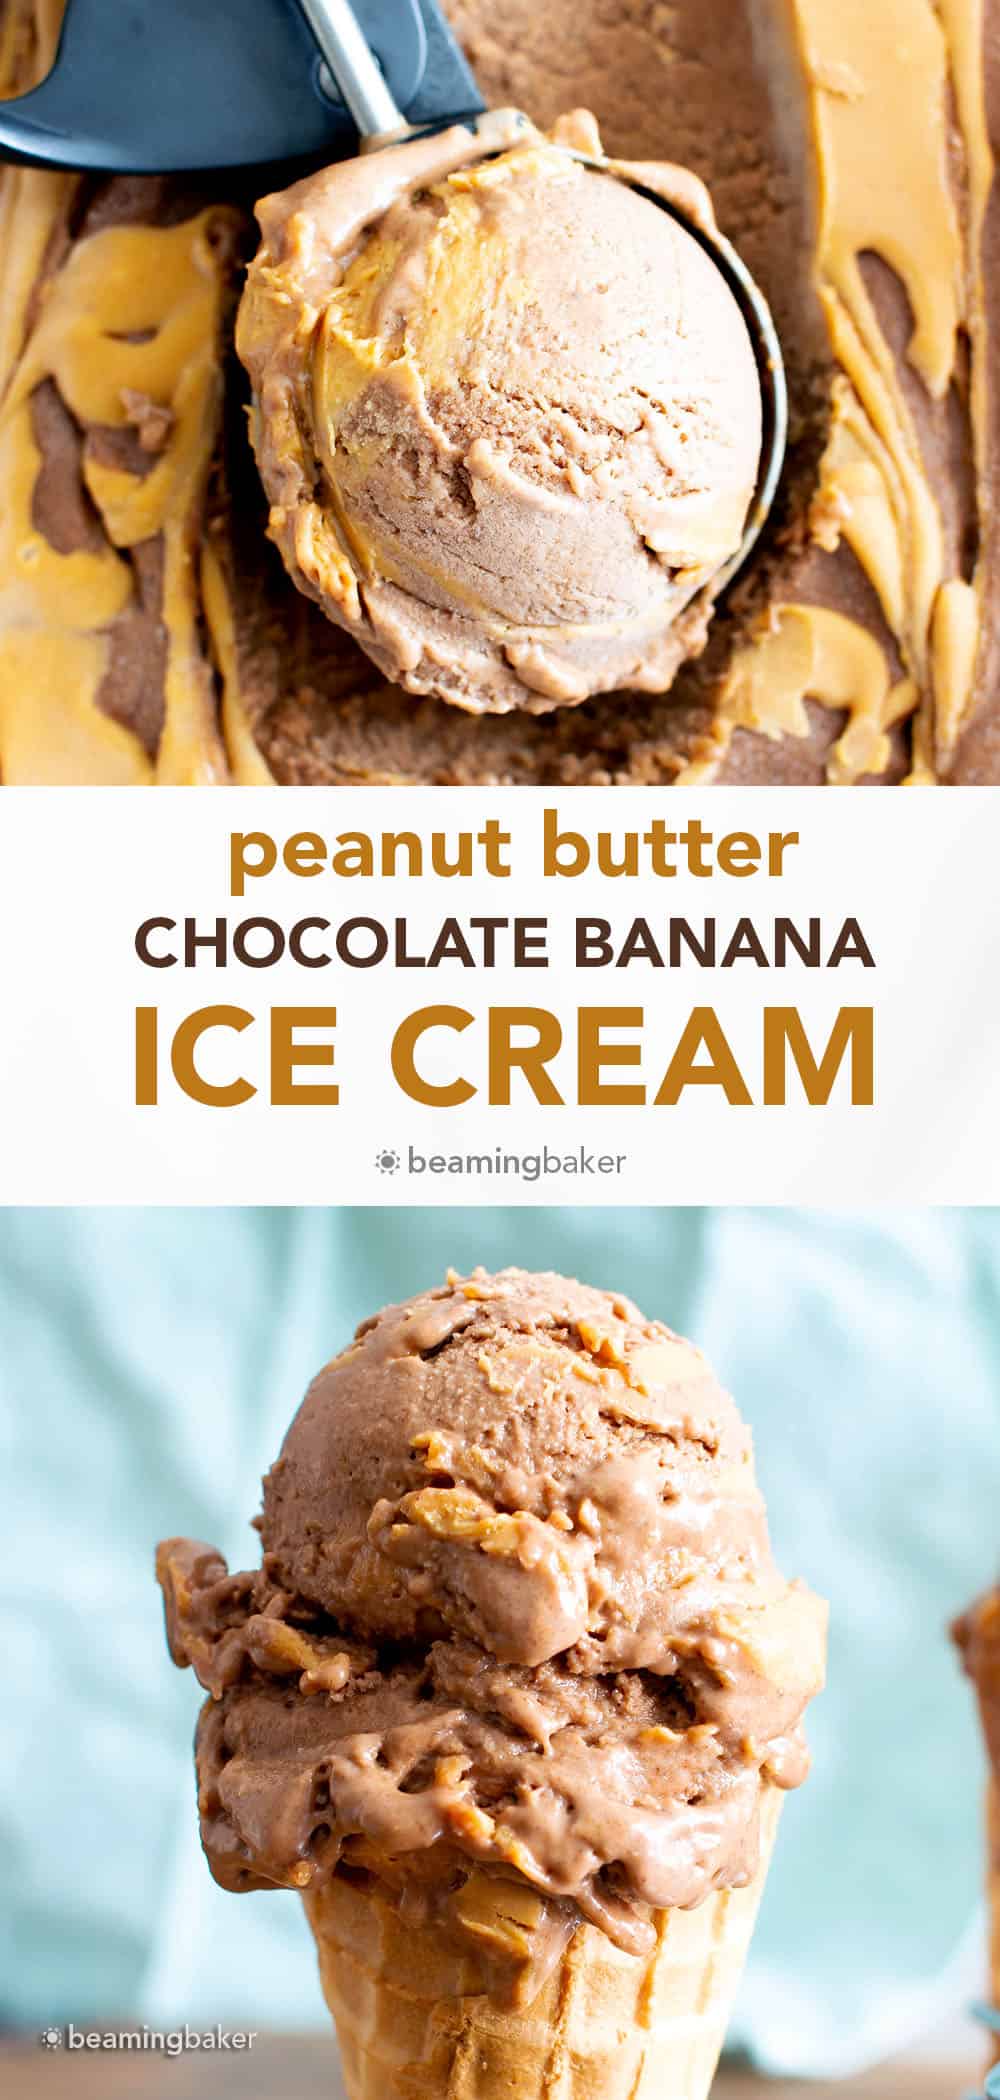 Chocolate Peanut Butter Banana Ice Cream: Just 4 ingredients for the best healthy chocolate peanut butter banana ice cream—rich ‘n creamy, packed with peanut butter cup flavor! #Chocolate #PeanutButter #BananaIceCream #IceCream | Recipe at BeamingBaker.com